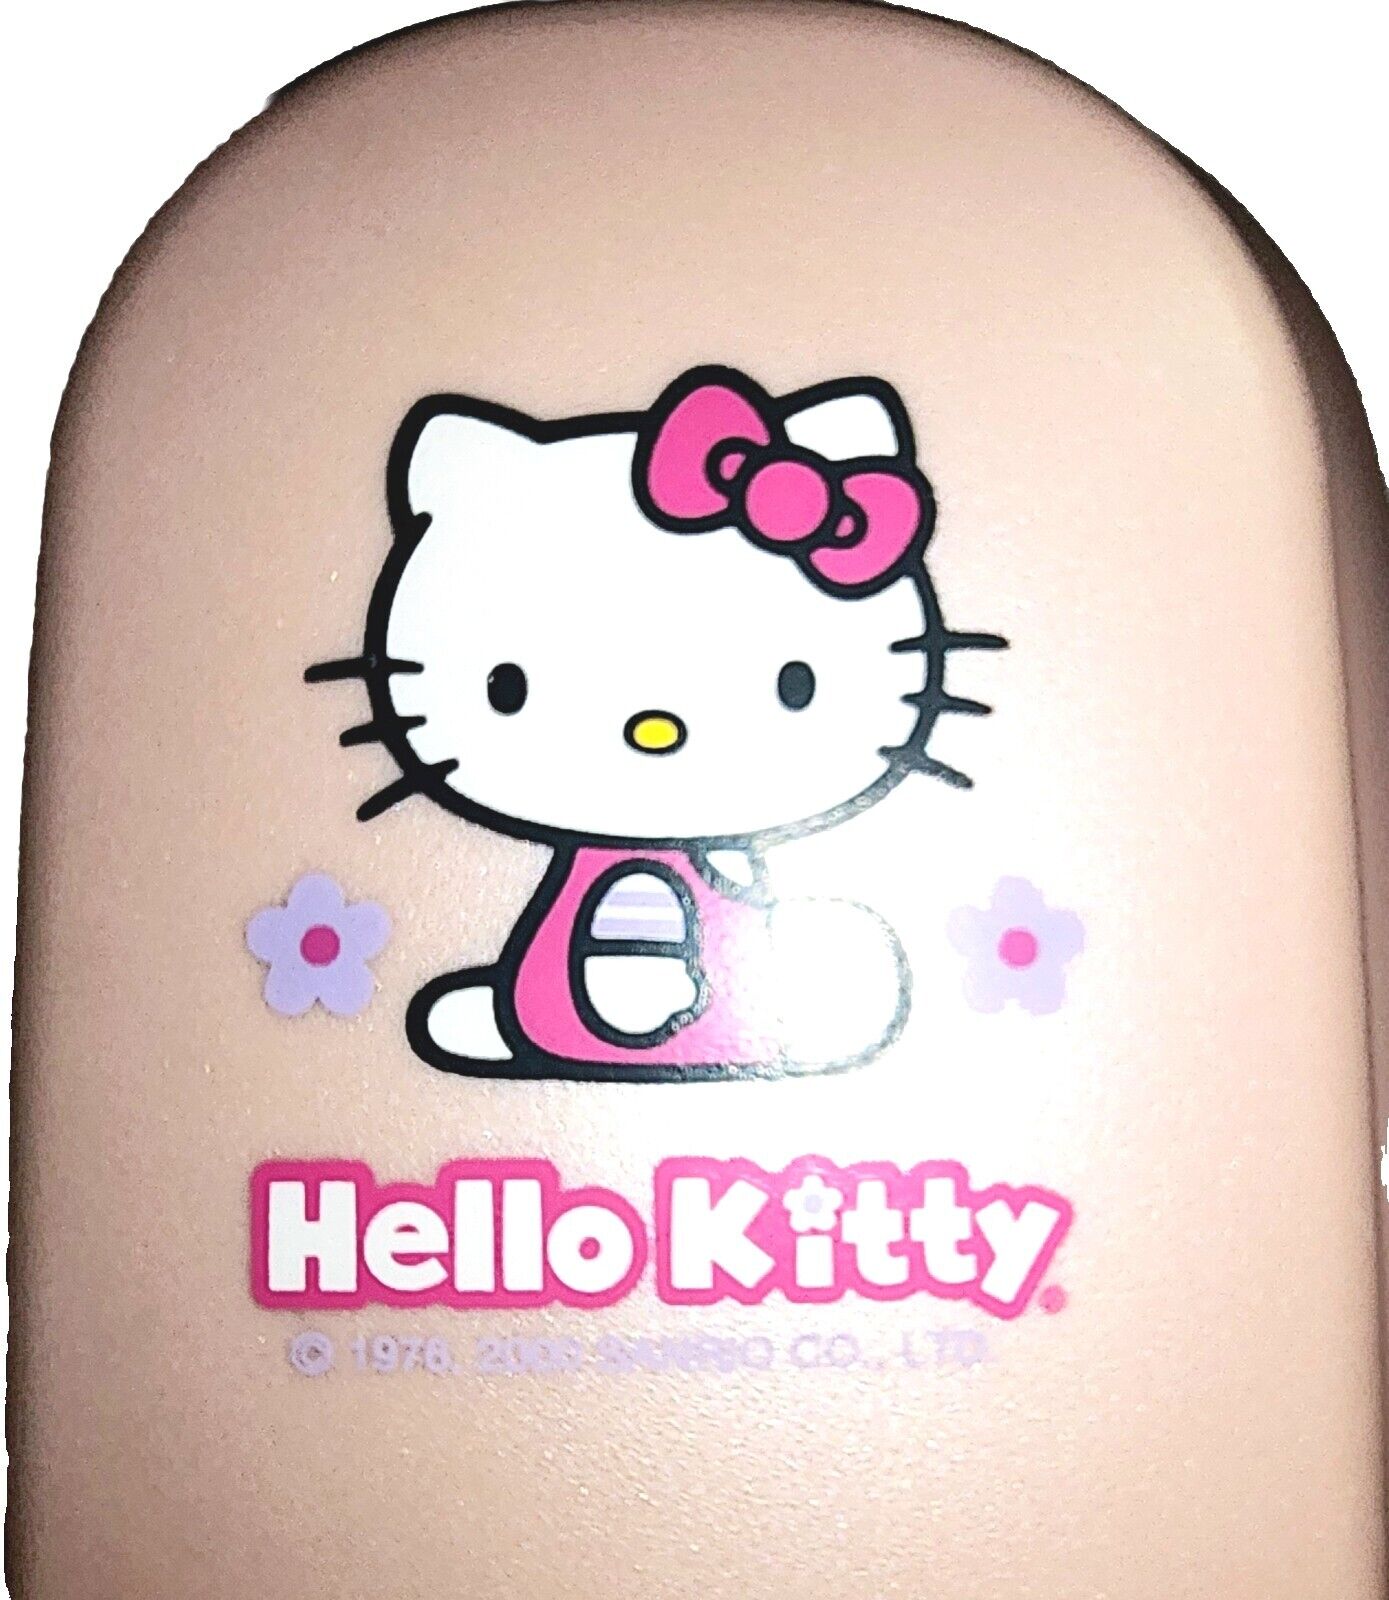 Retro Hello Kitty Pink Telephone Phone Landline GE Model 29255HE7-C Collectible